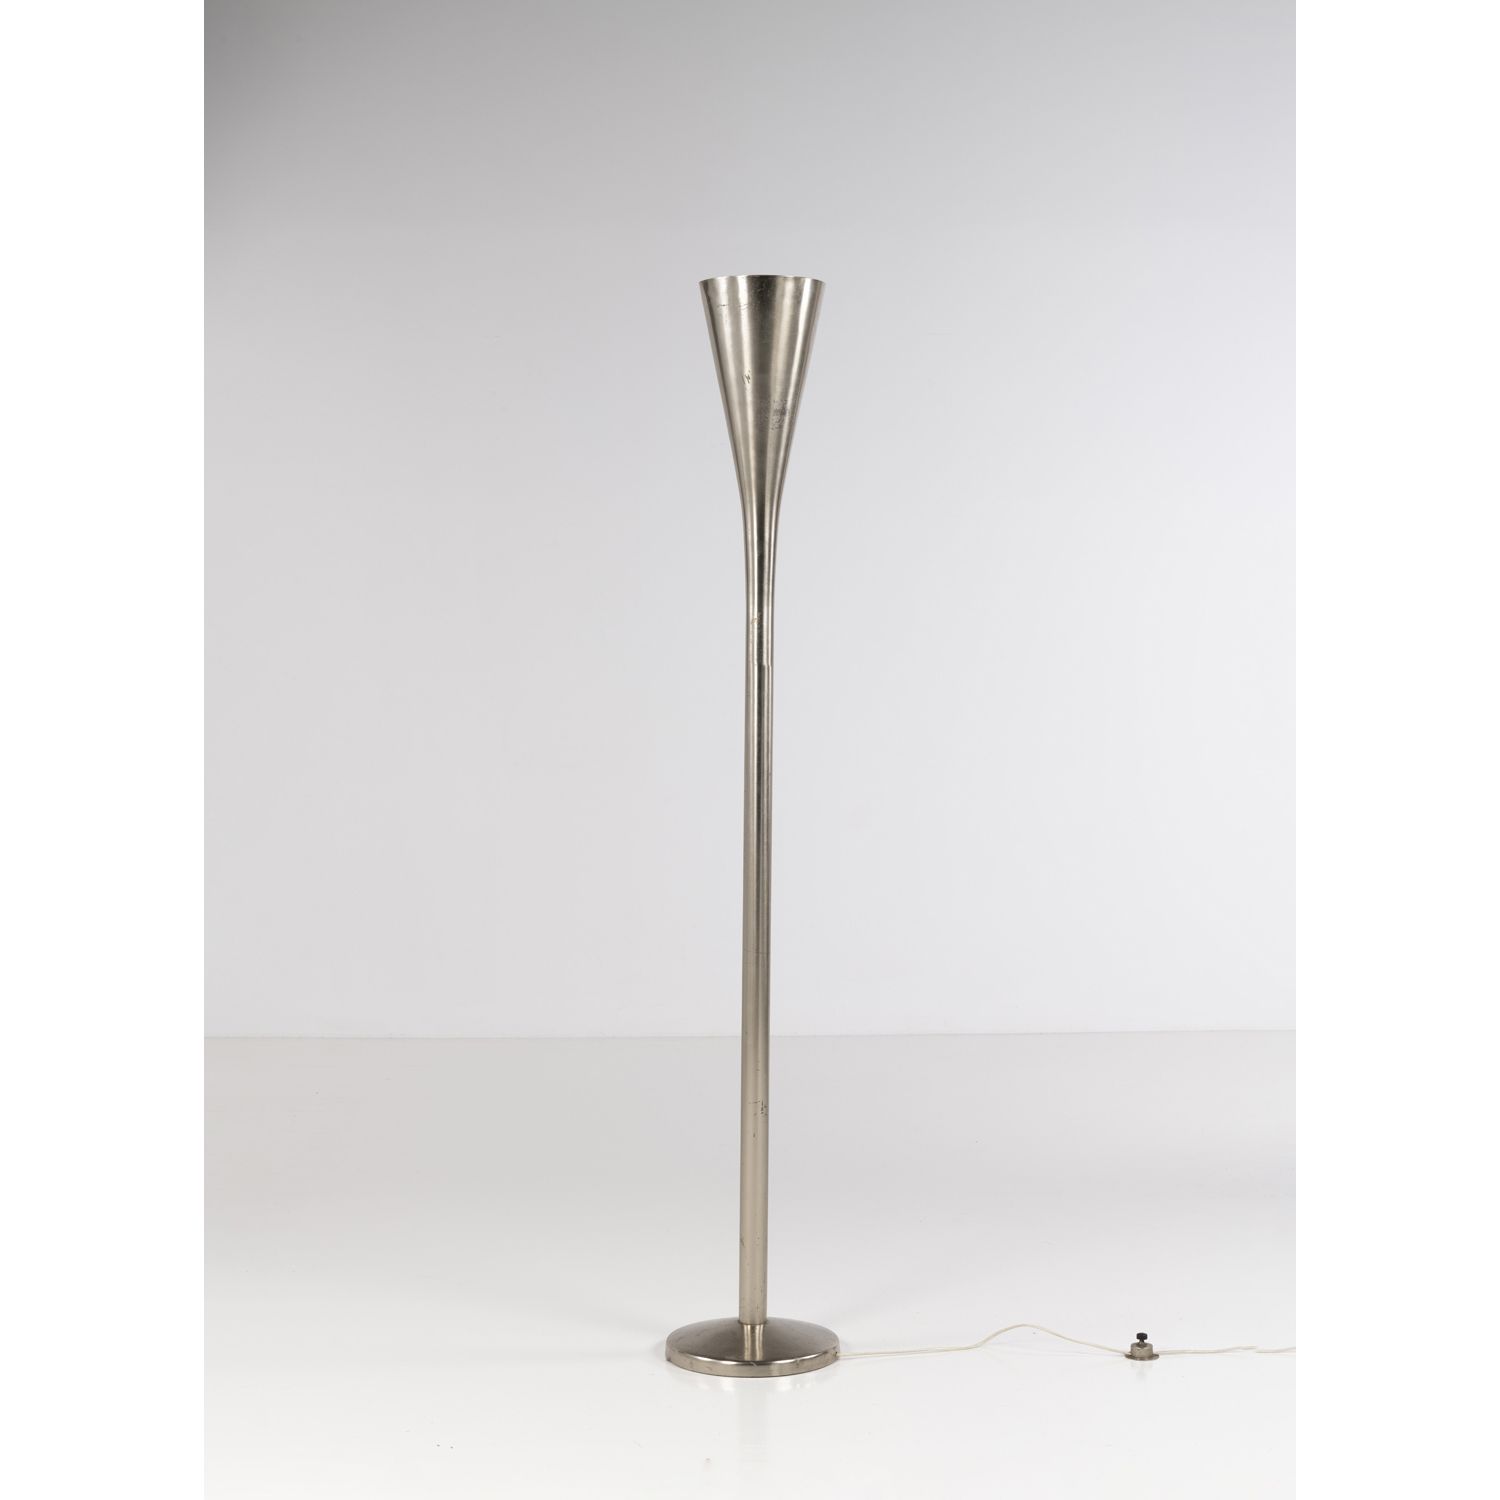 Null Pietro Chiesa (1892-1948)

Floor lamp

Metal

Edited by Luigi Fontana

Mode&hellip;